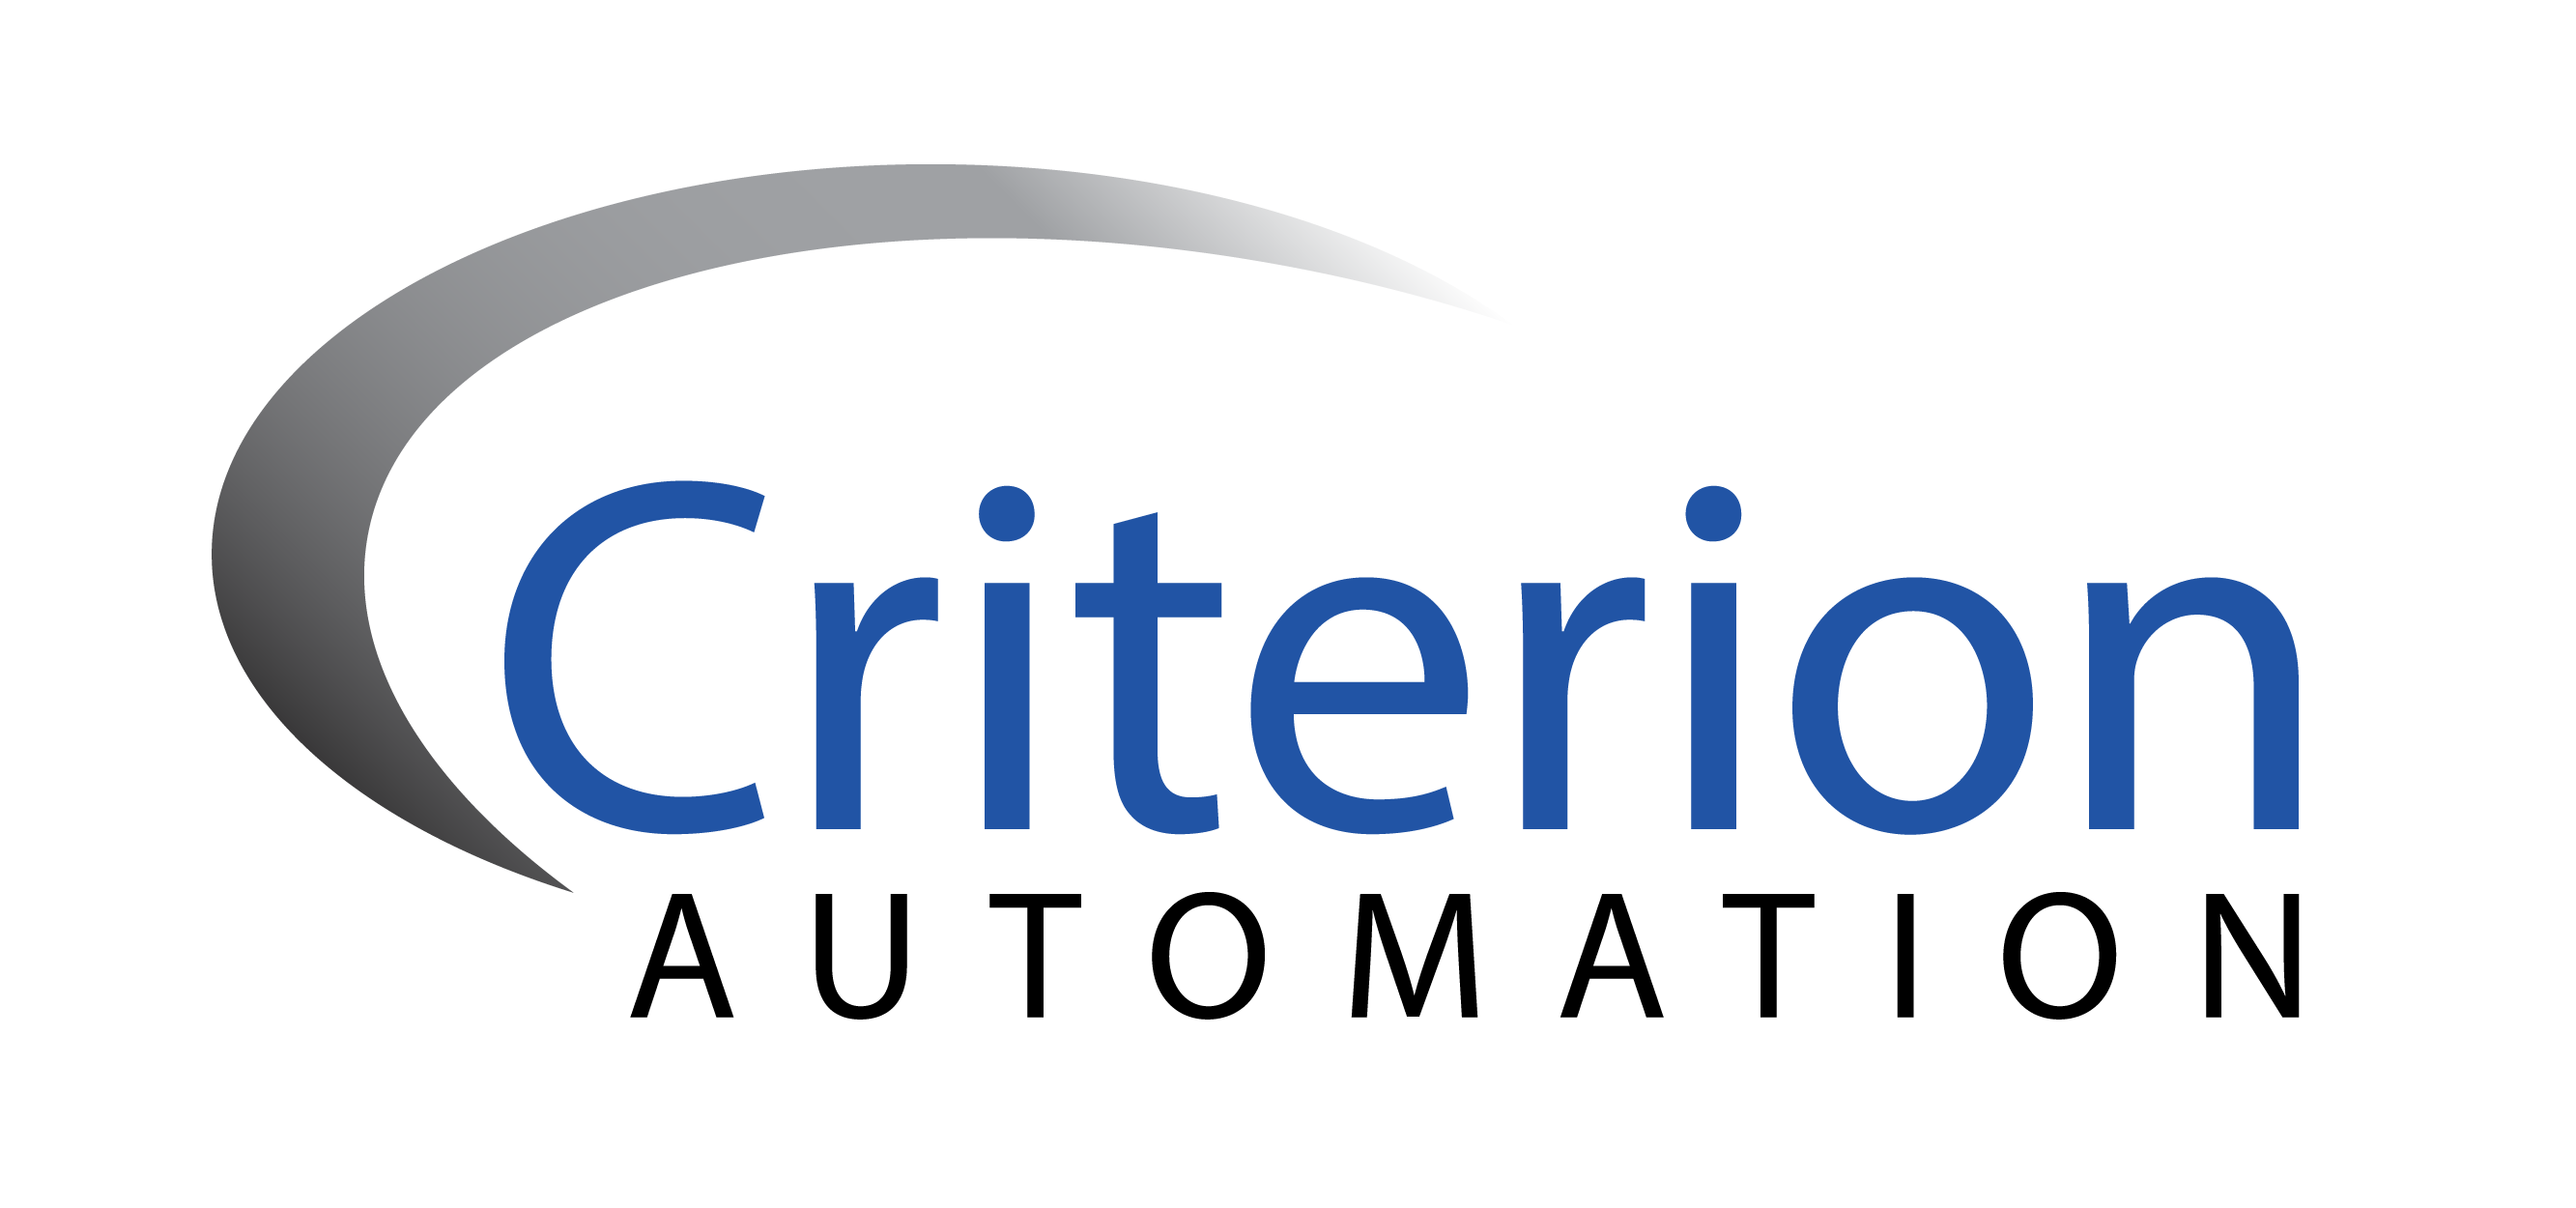 Criterion Automation Logo-01